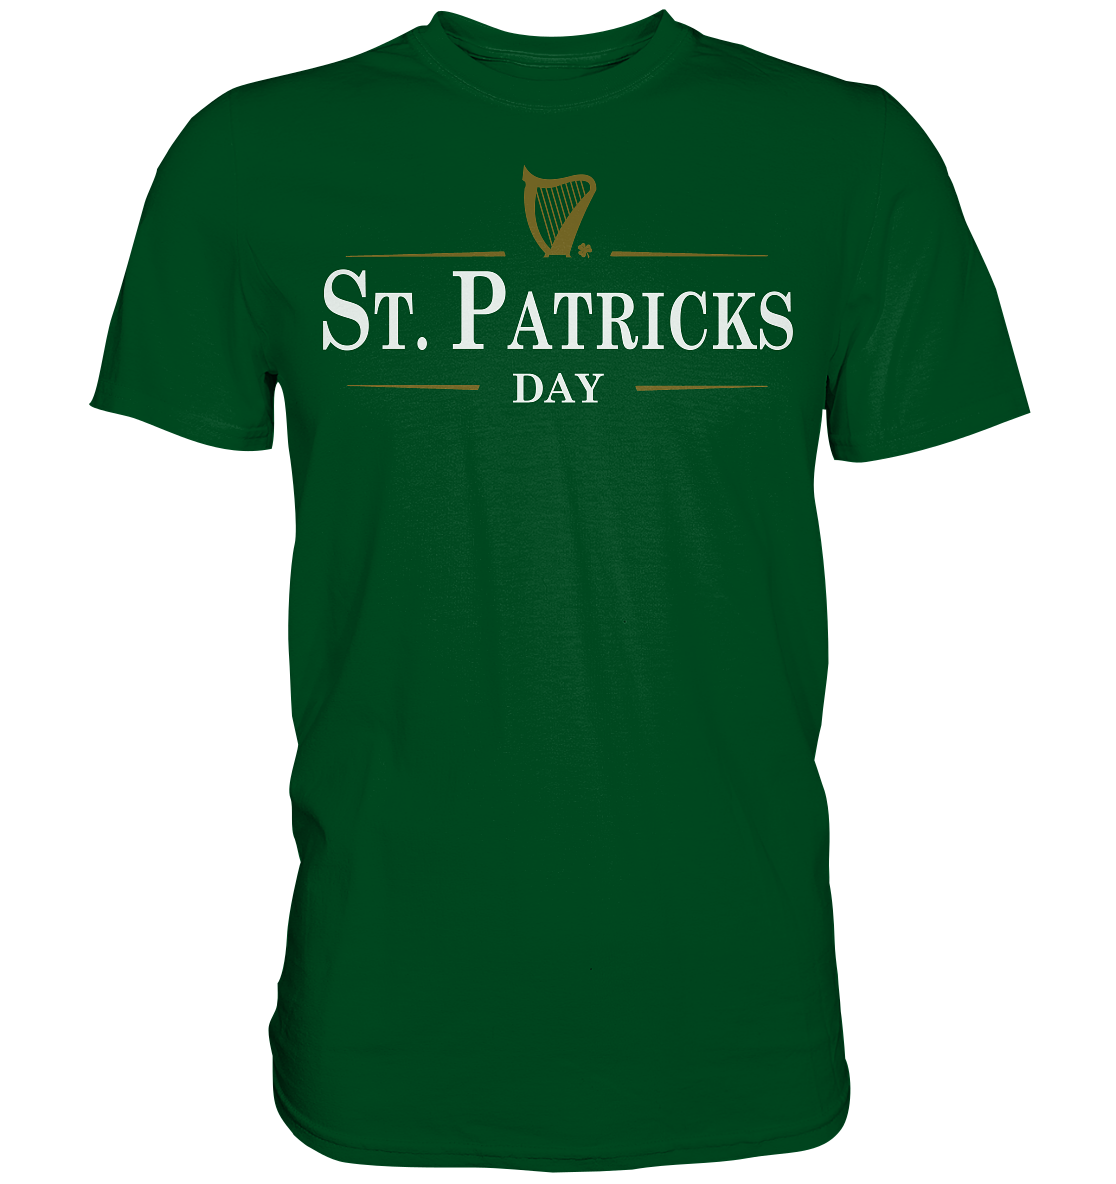 St. Patricks Day "Stout" - Premium Shirt